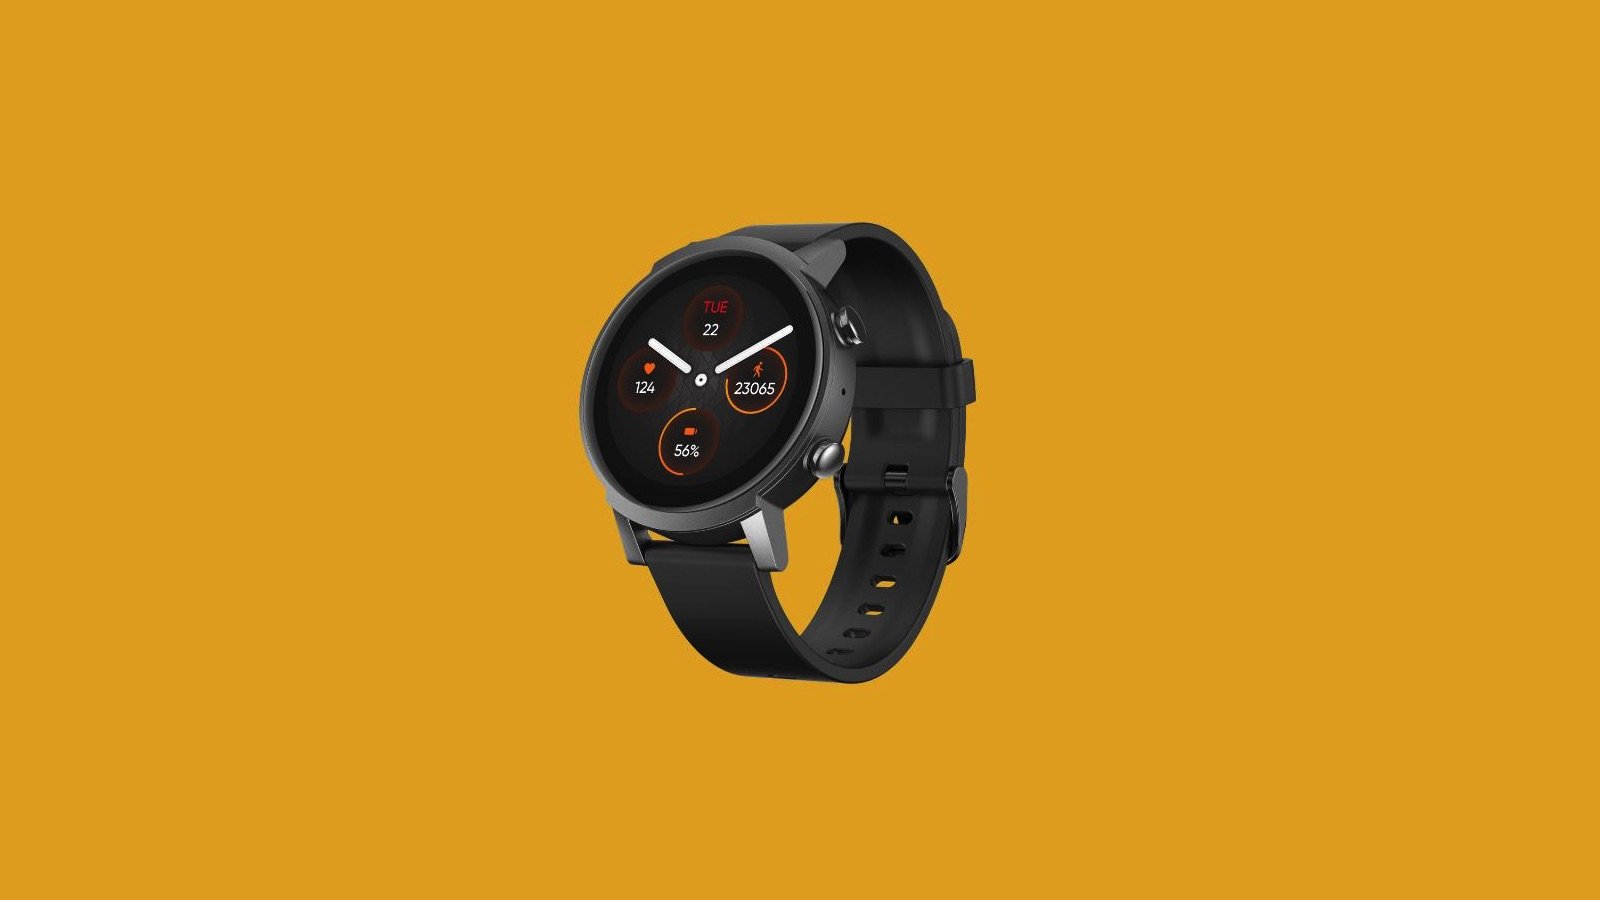 Mobvoi TicWatch E3 advanced health watch has a Qualcomm Snapdragon Wear 4100 platform